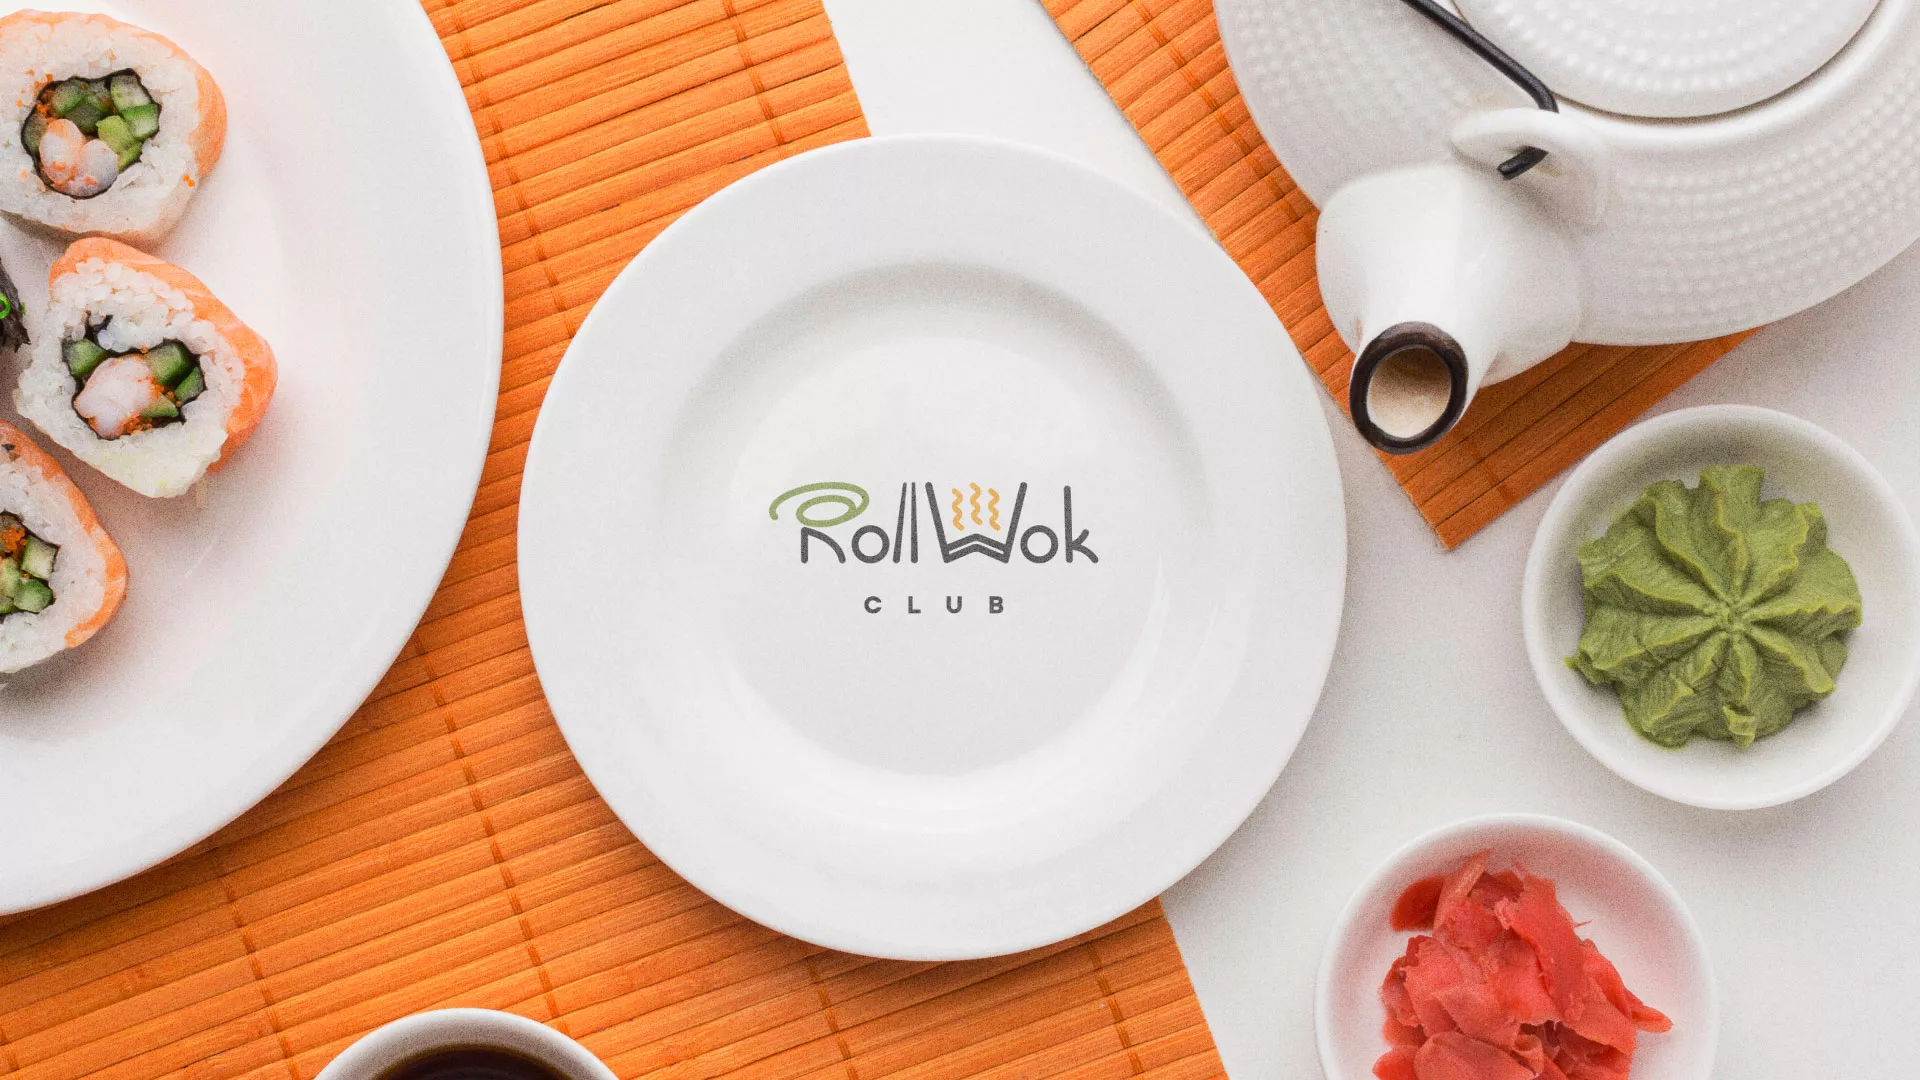 Разработка логотипа и фирменного стиля суши-бара «Roll Wok Club» в Киржаче